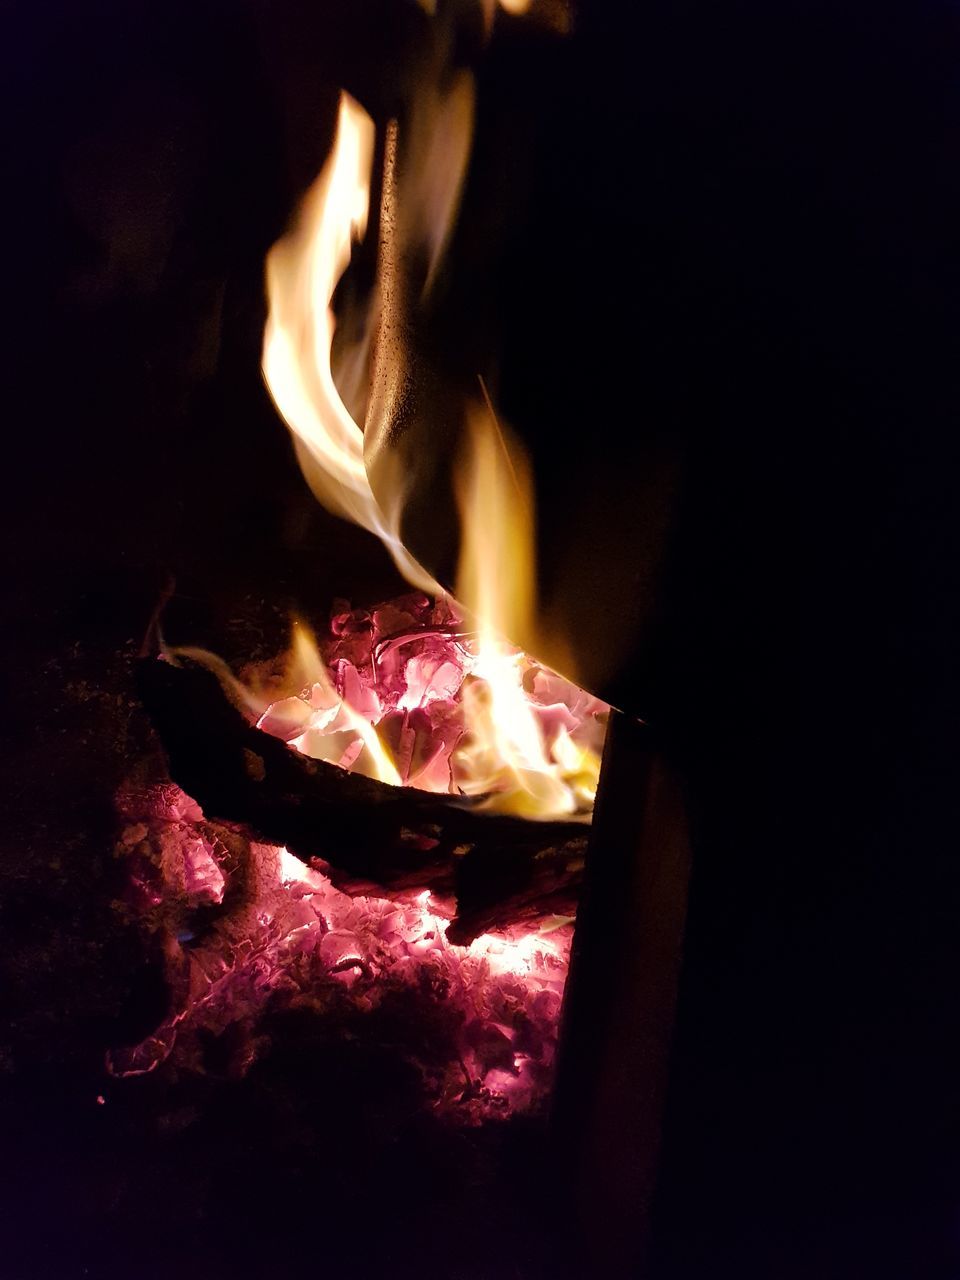 burning, flame, heat - temperature, glowing, night, no people, close-up, bonfire, indoors, nature